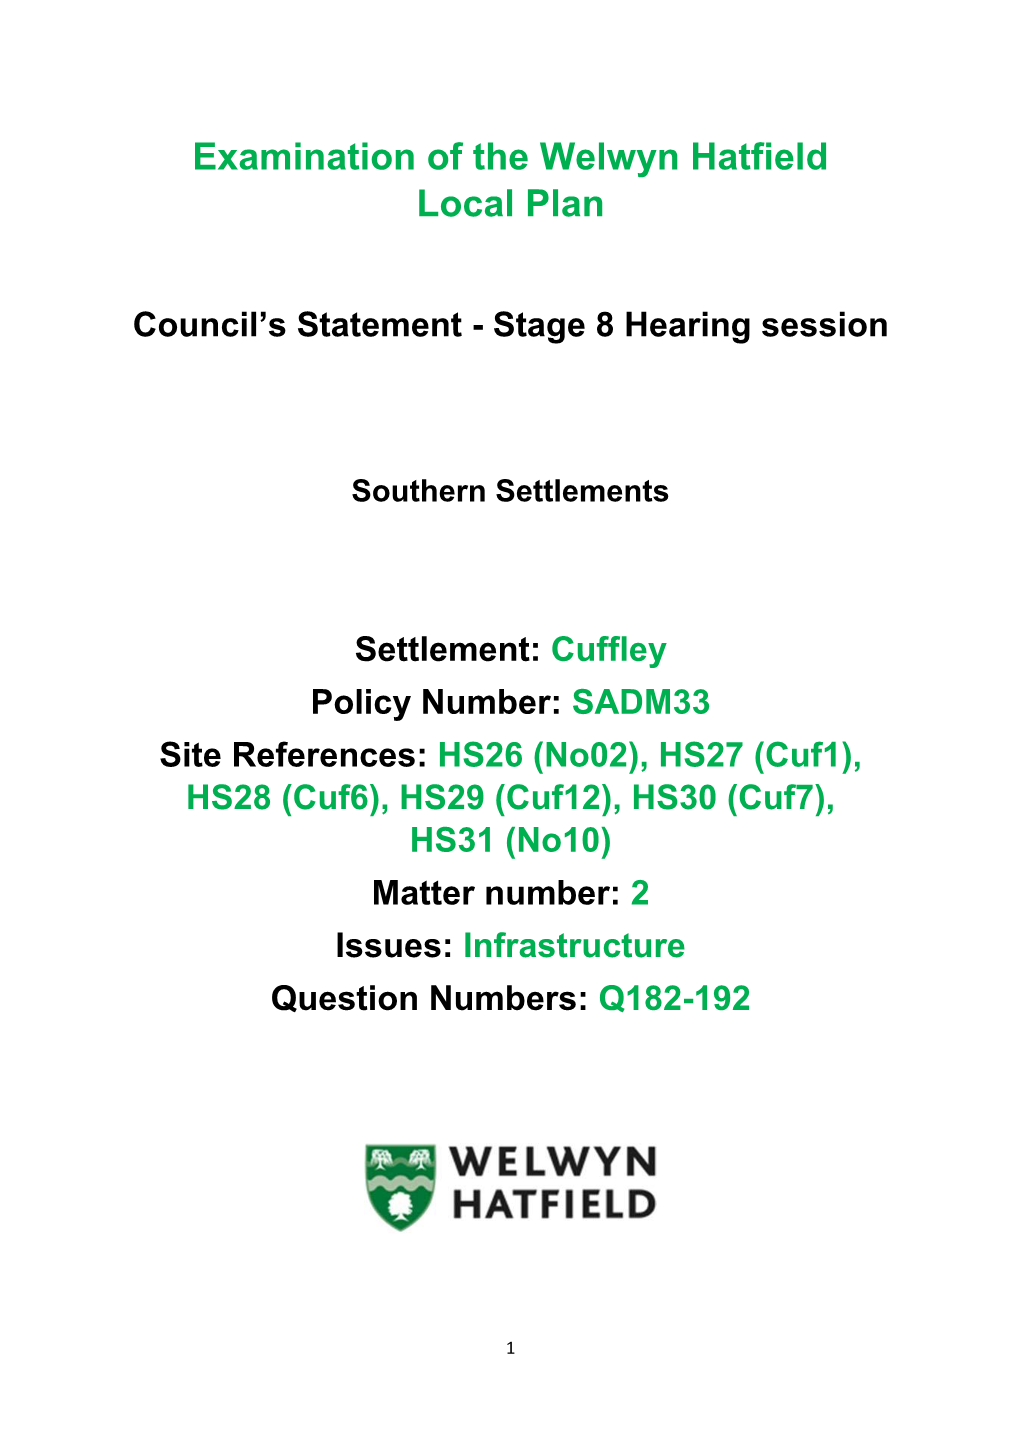 Examination of the Welwyn Hatfield Local Plan